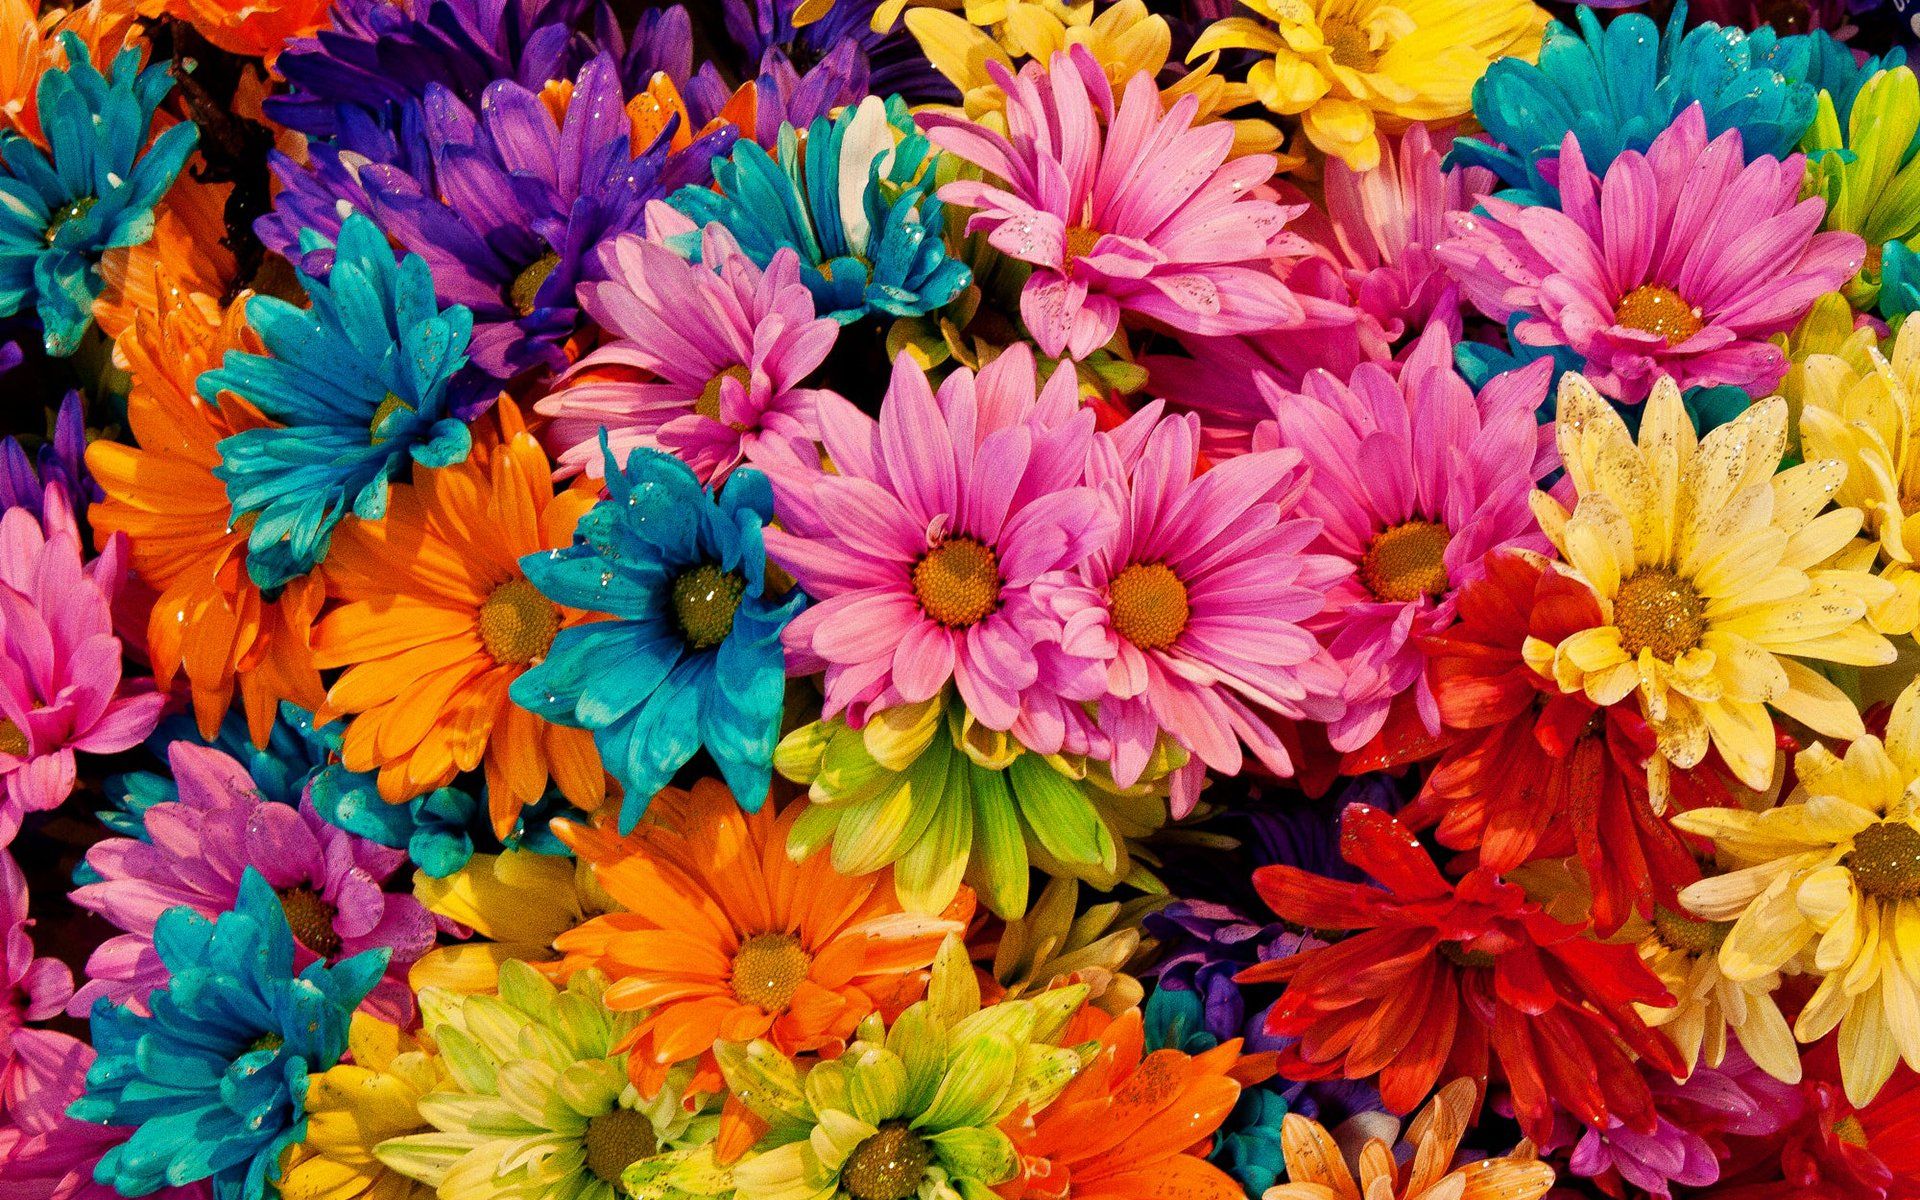 Fondos de pantalla de flores de colores - FondosMil